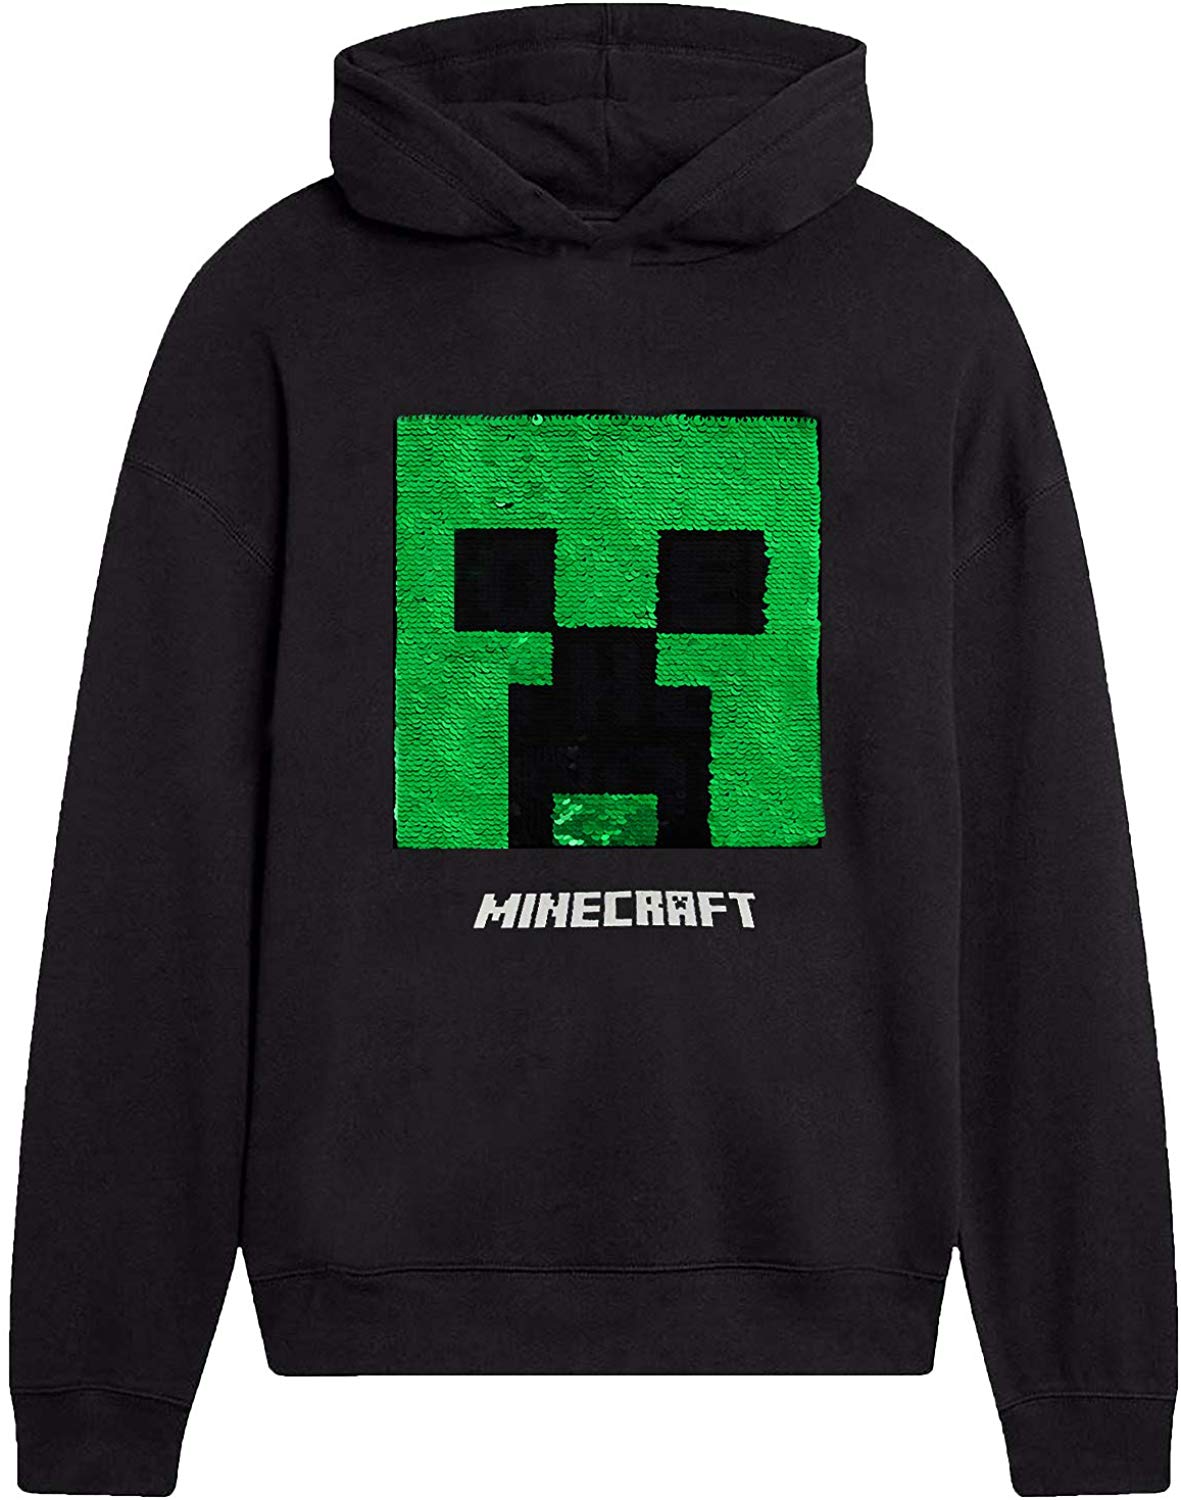 Minecraft Hoodie, Comfy Cotton Sweatshirt for Boys, Flippy Sequin ...